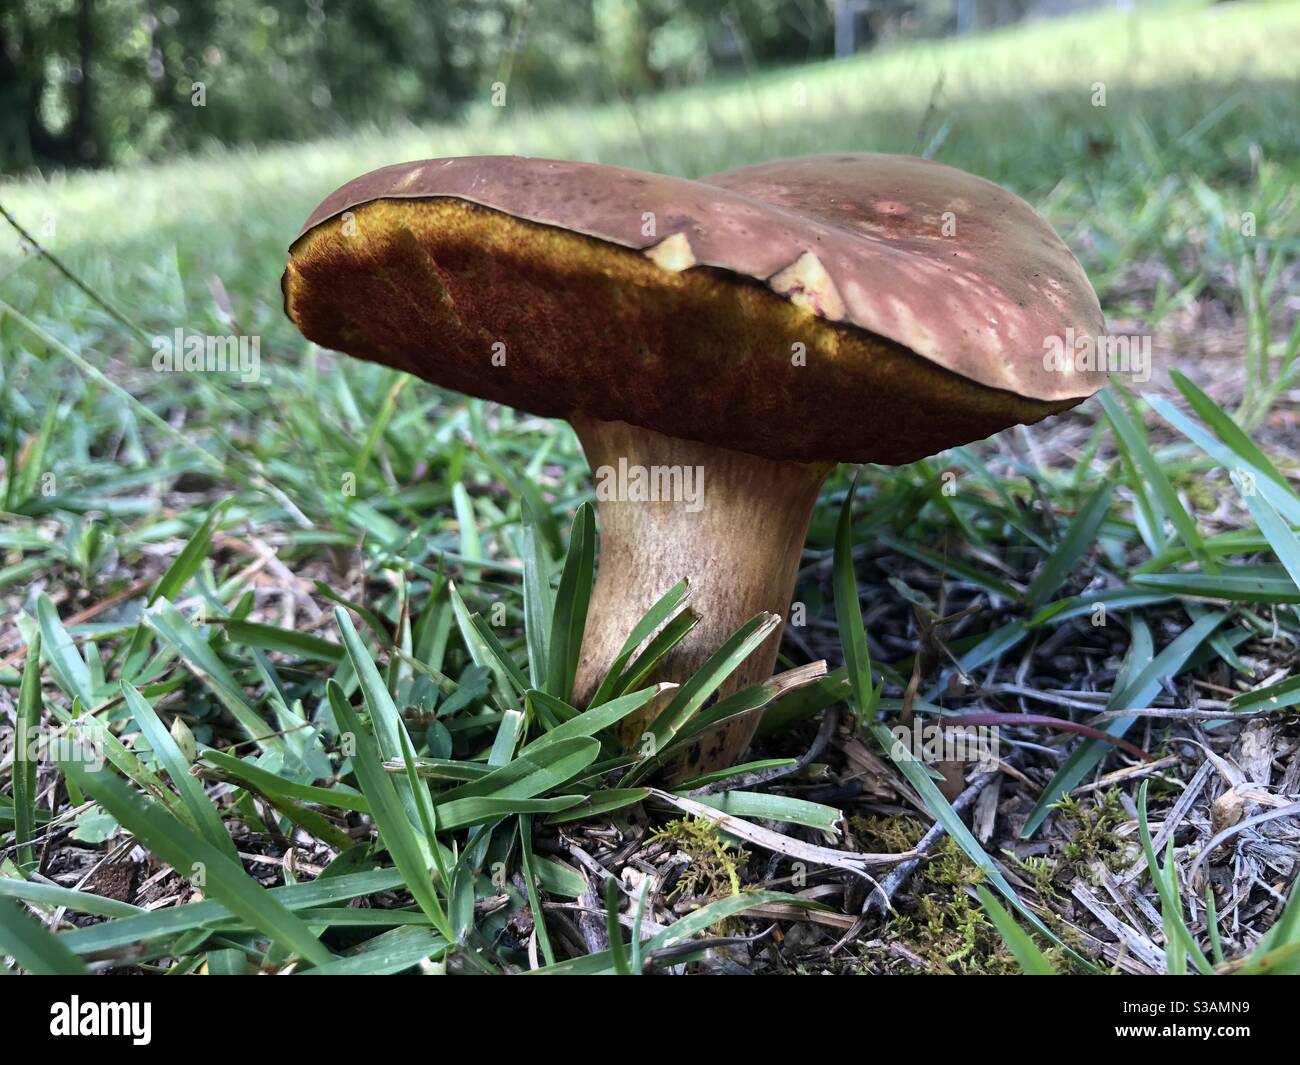 Mushroom in the grass Stock Photo